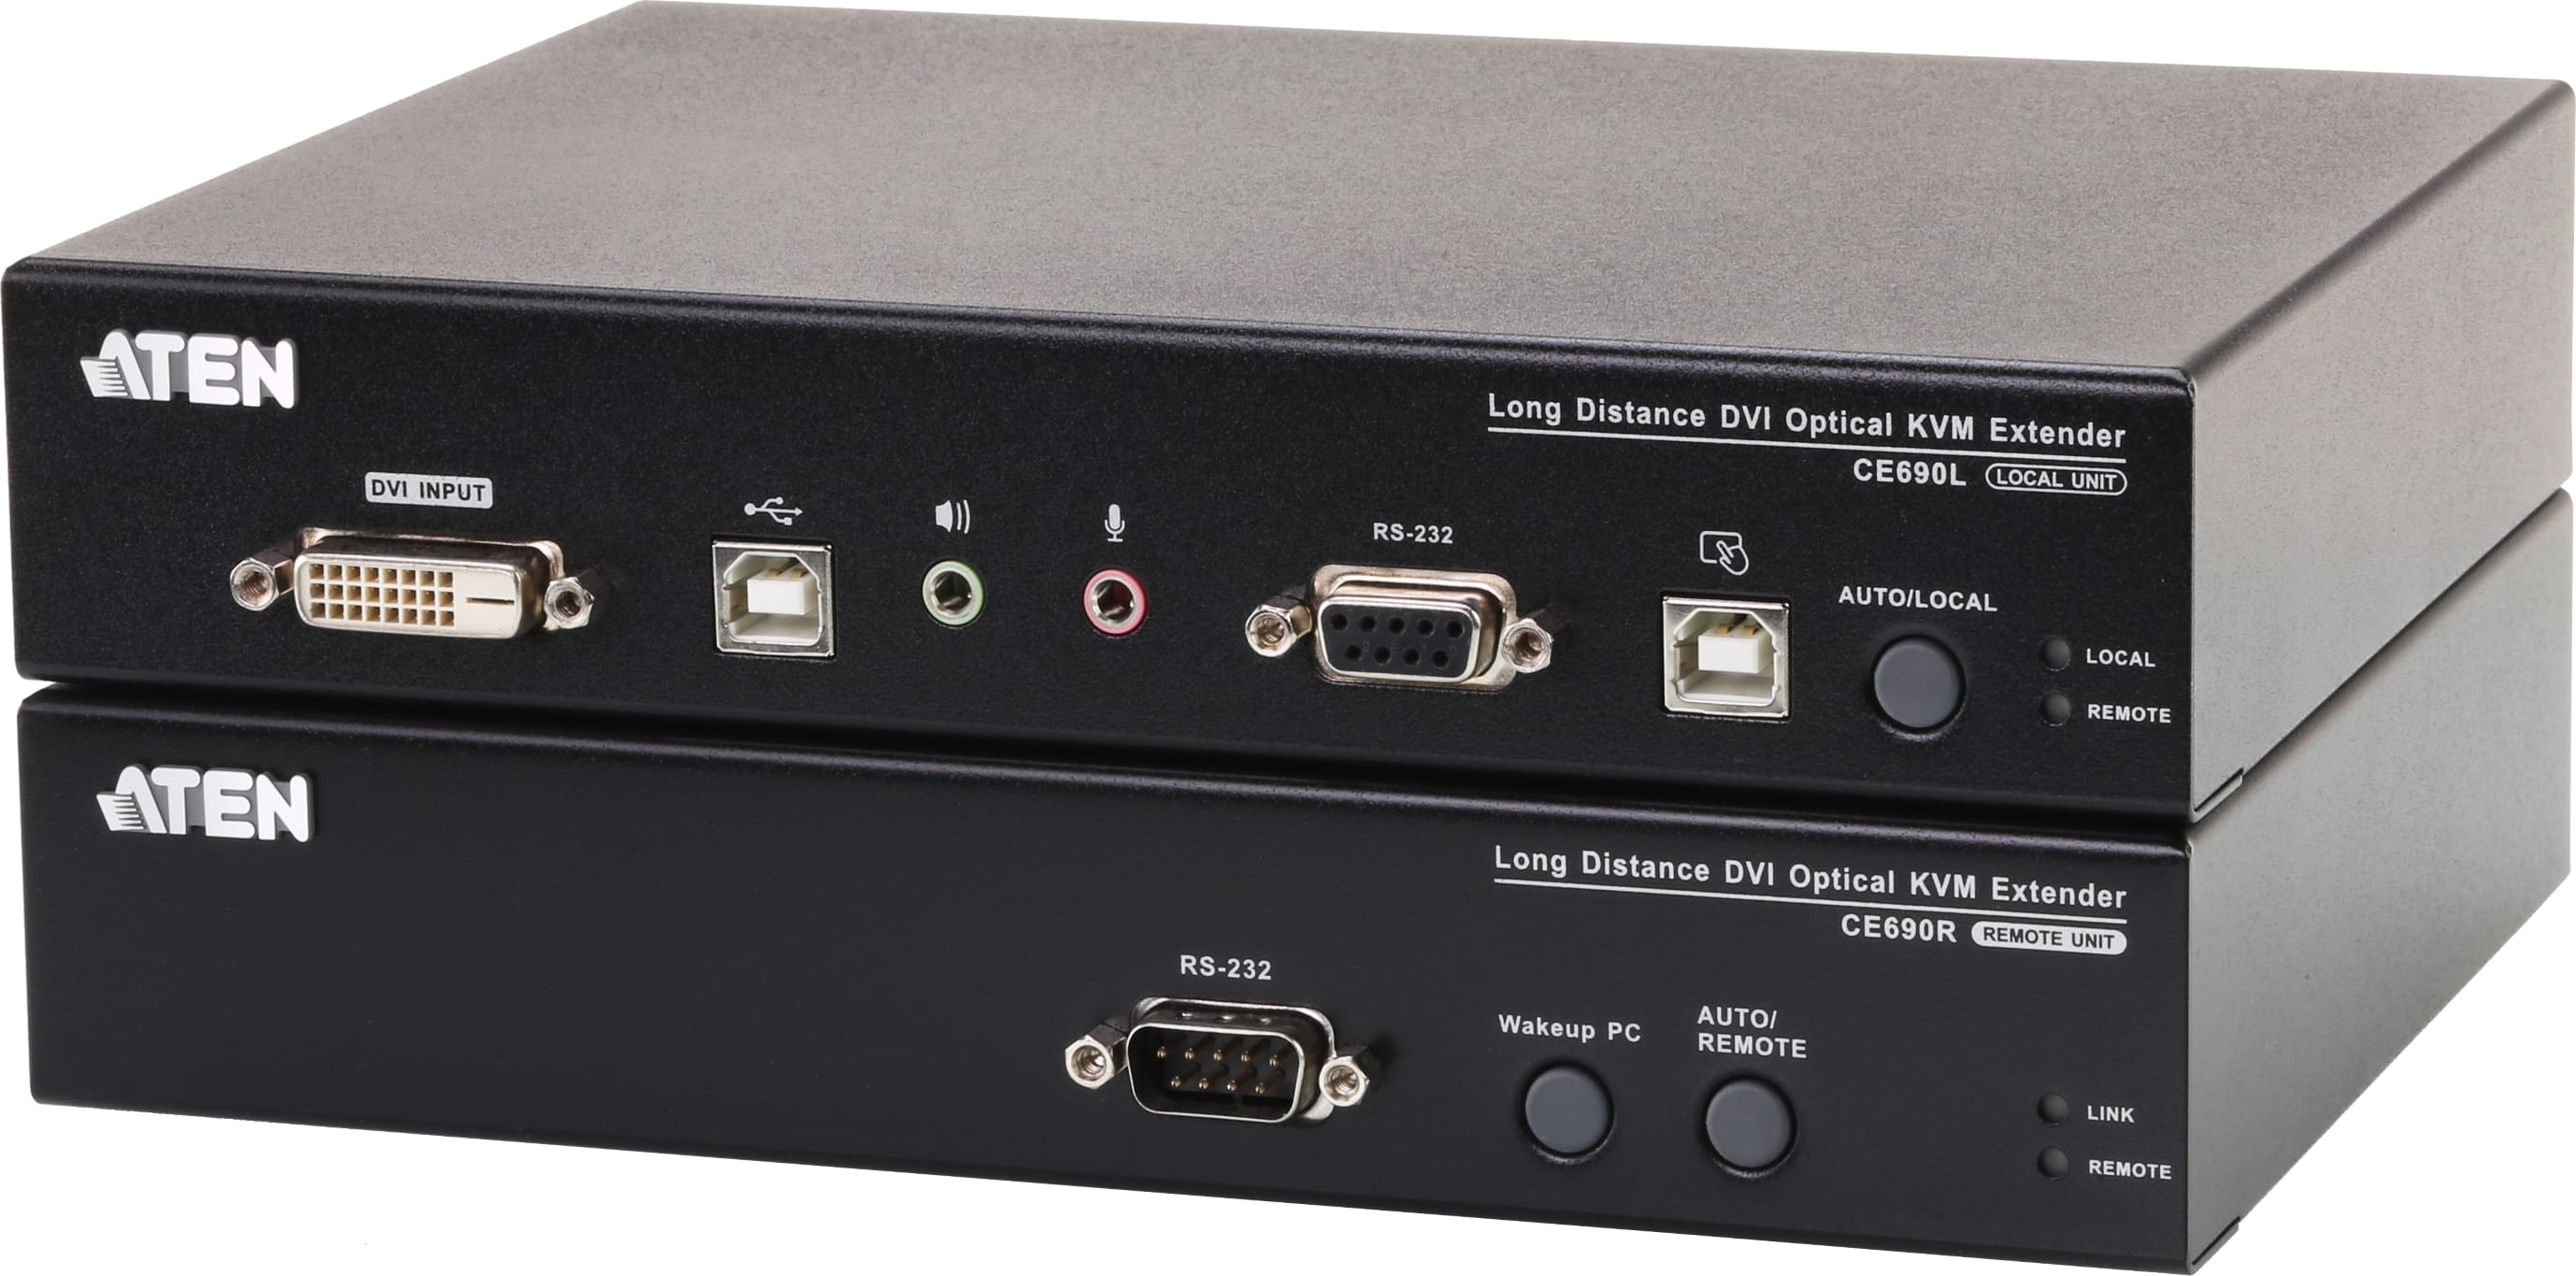 12 Port USB DVI KVM Switch with Audio 1920 x 1200 Video Resolution